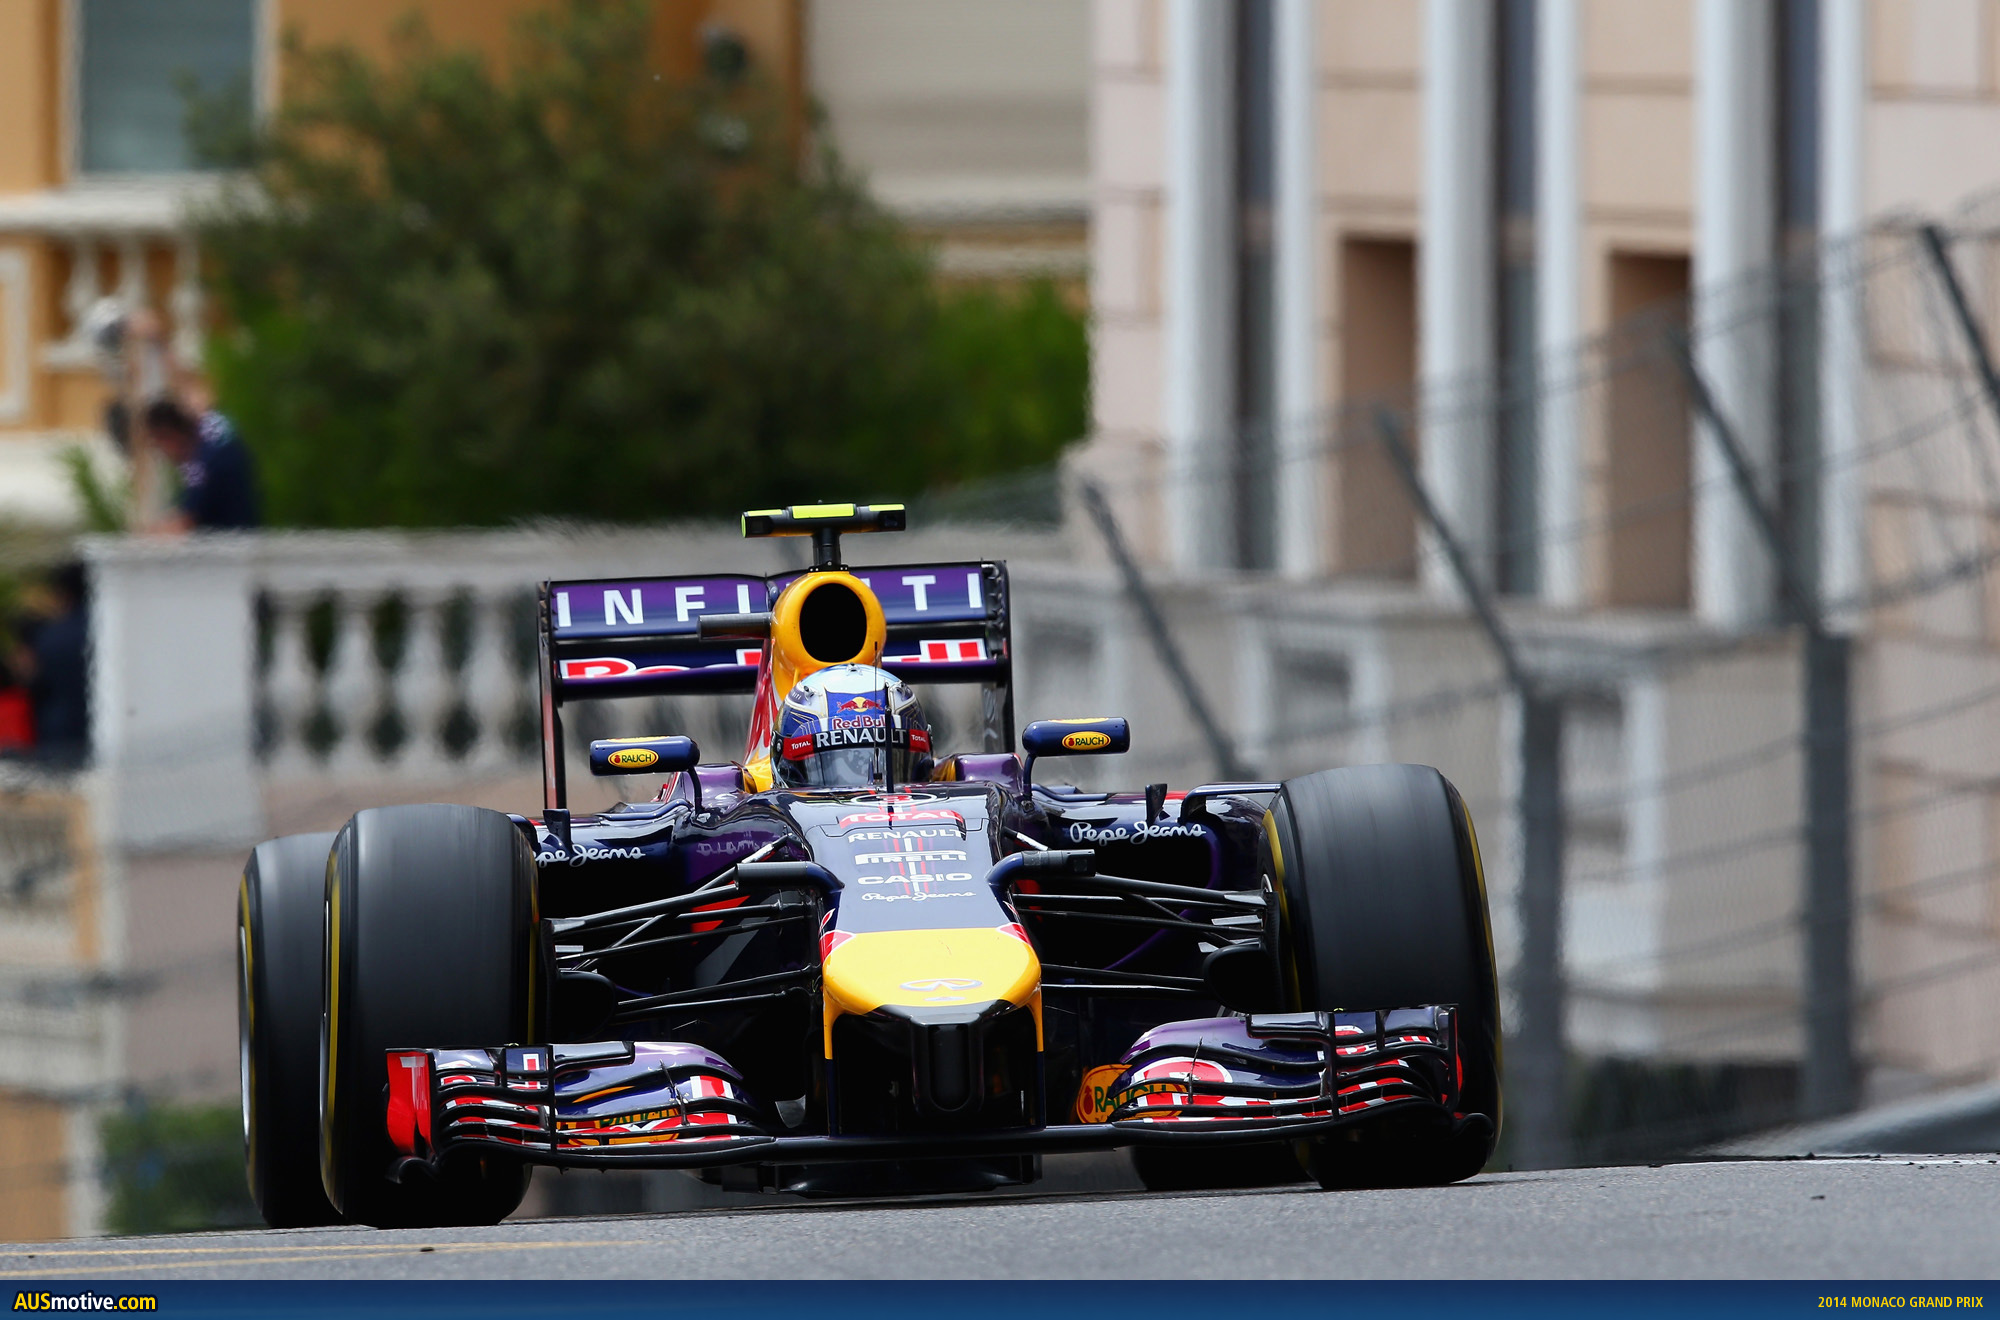 AUSmotive.com » 2014 Monaco Grand Prix in pictures